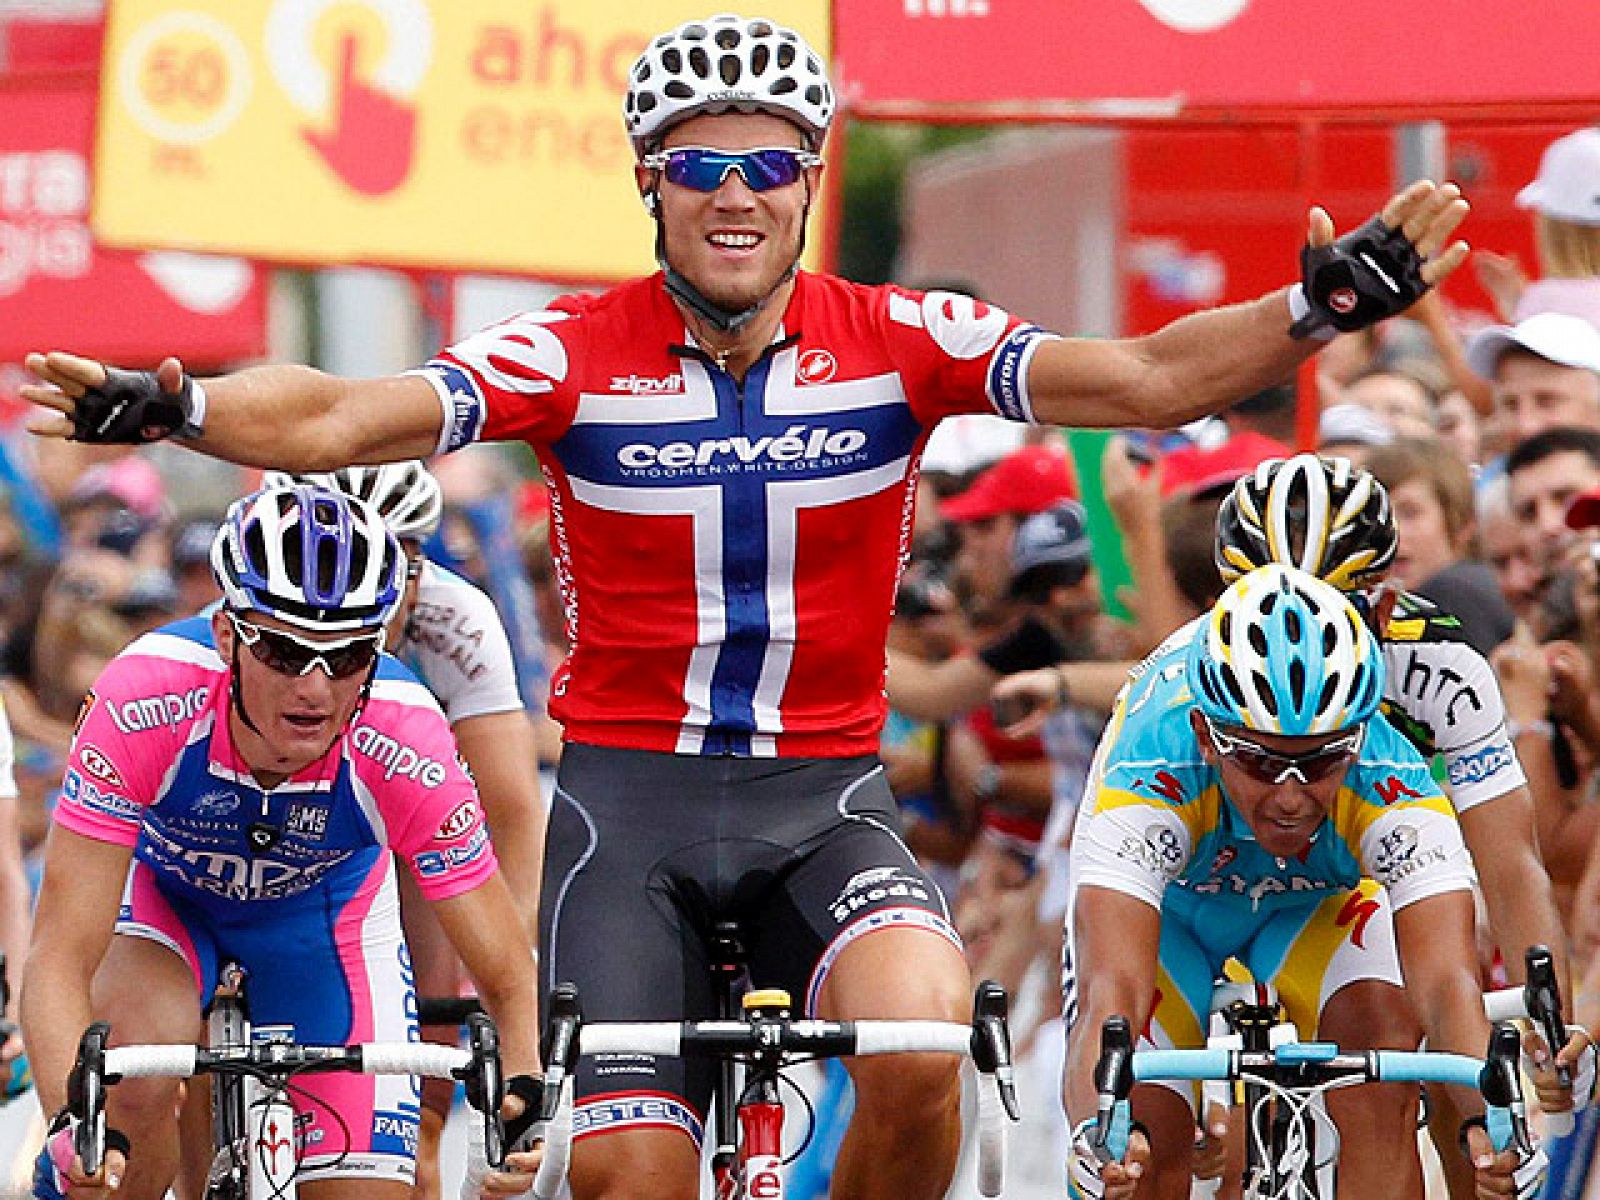 Resumen de la 6º etapa de la Vuelta entre Caravaca de la Cruz y Murcia. Hushovd se impuso al sprint.